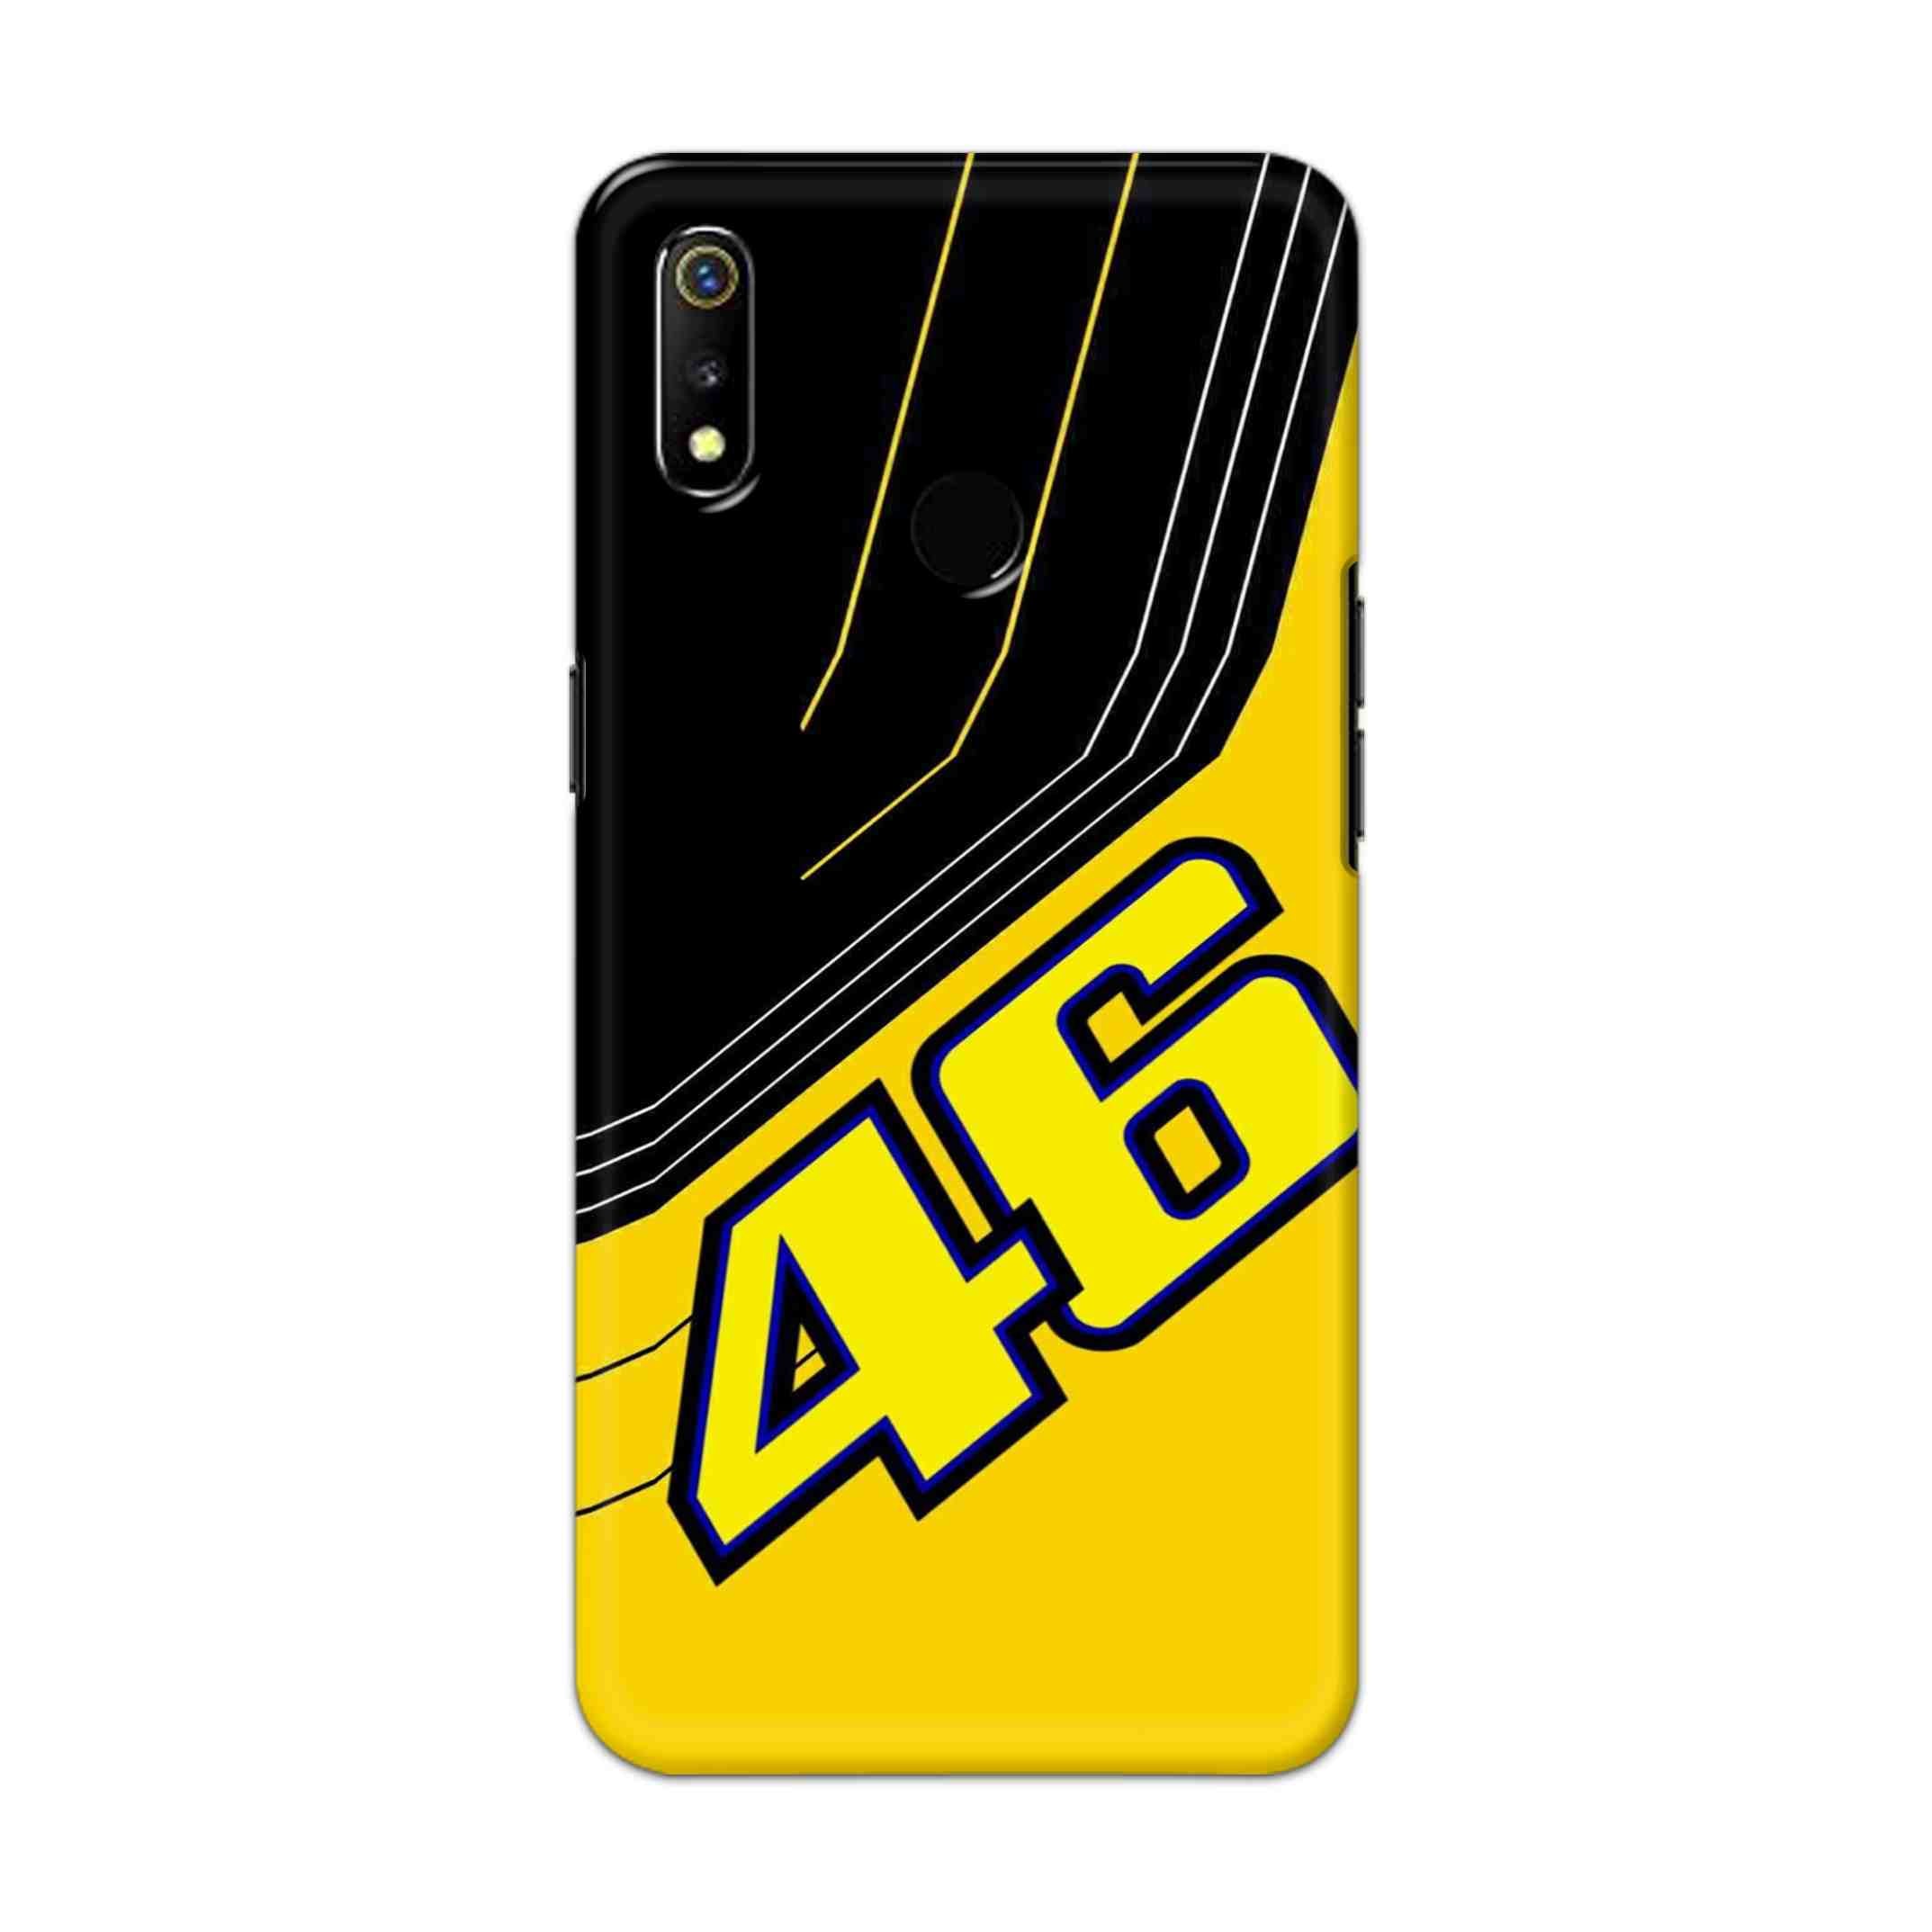 Buy 46 Hard Back Mobile Phone Case Cover For Oppo Realme 3 Online